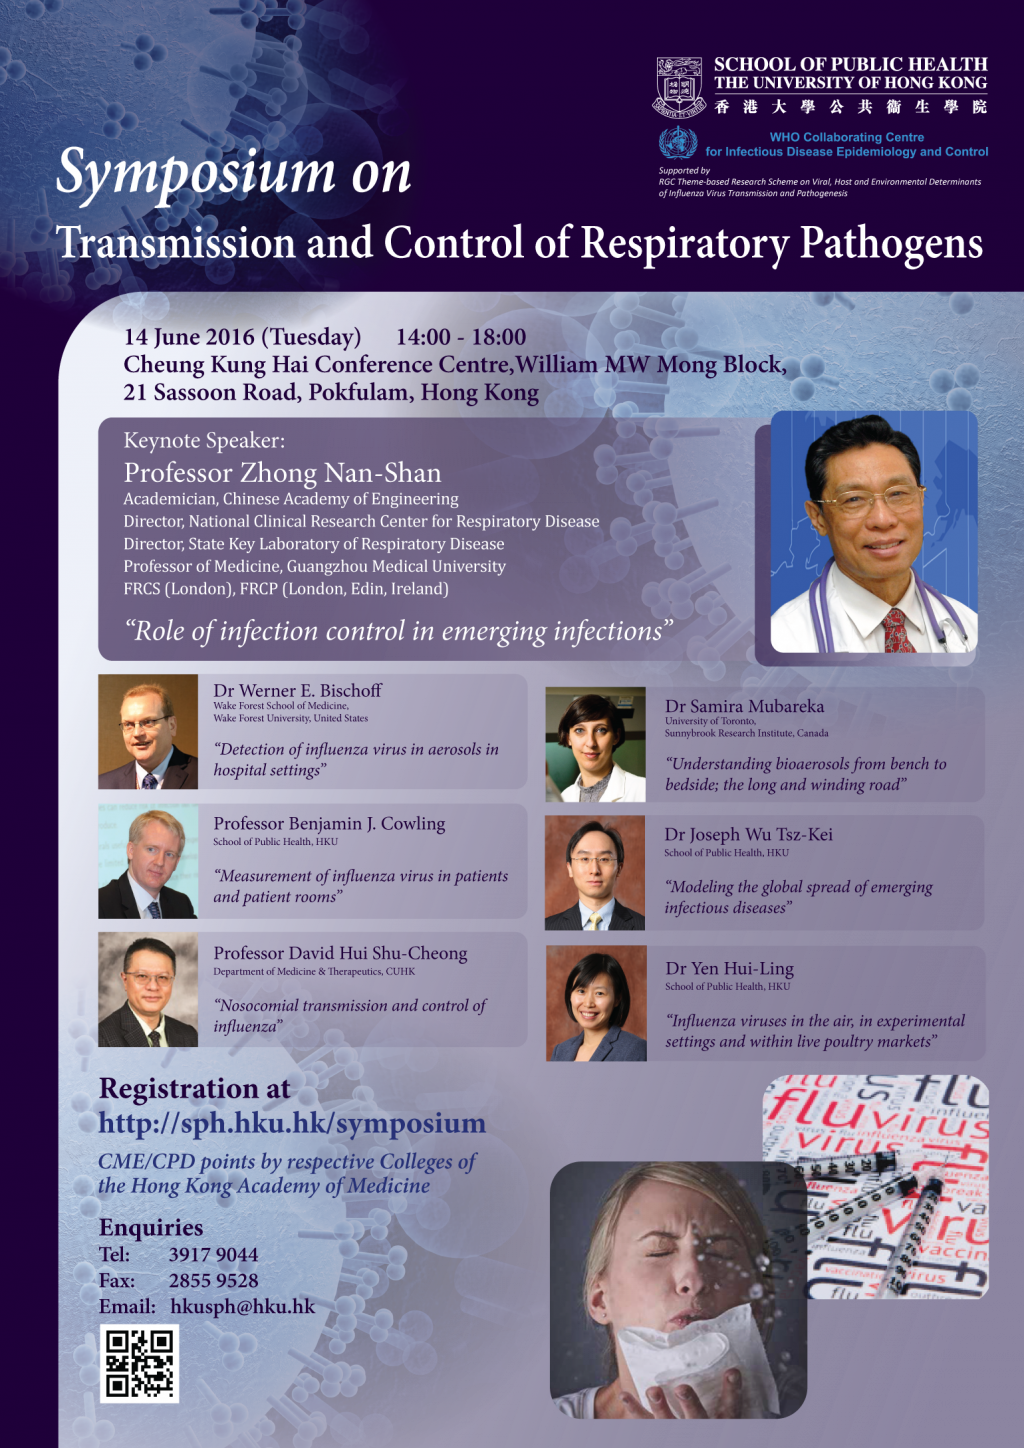 Symposium on Transmission and Control of Respiratory Pathogens